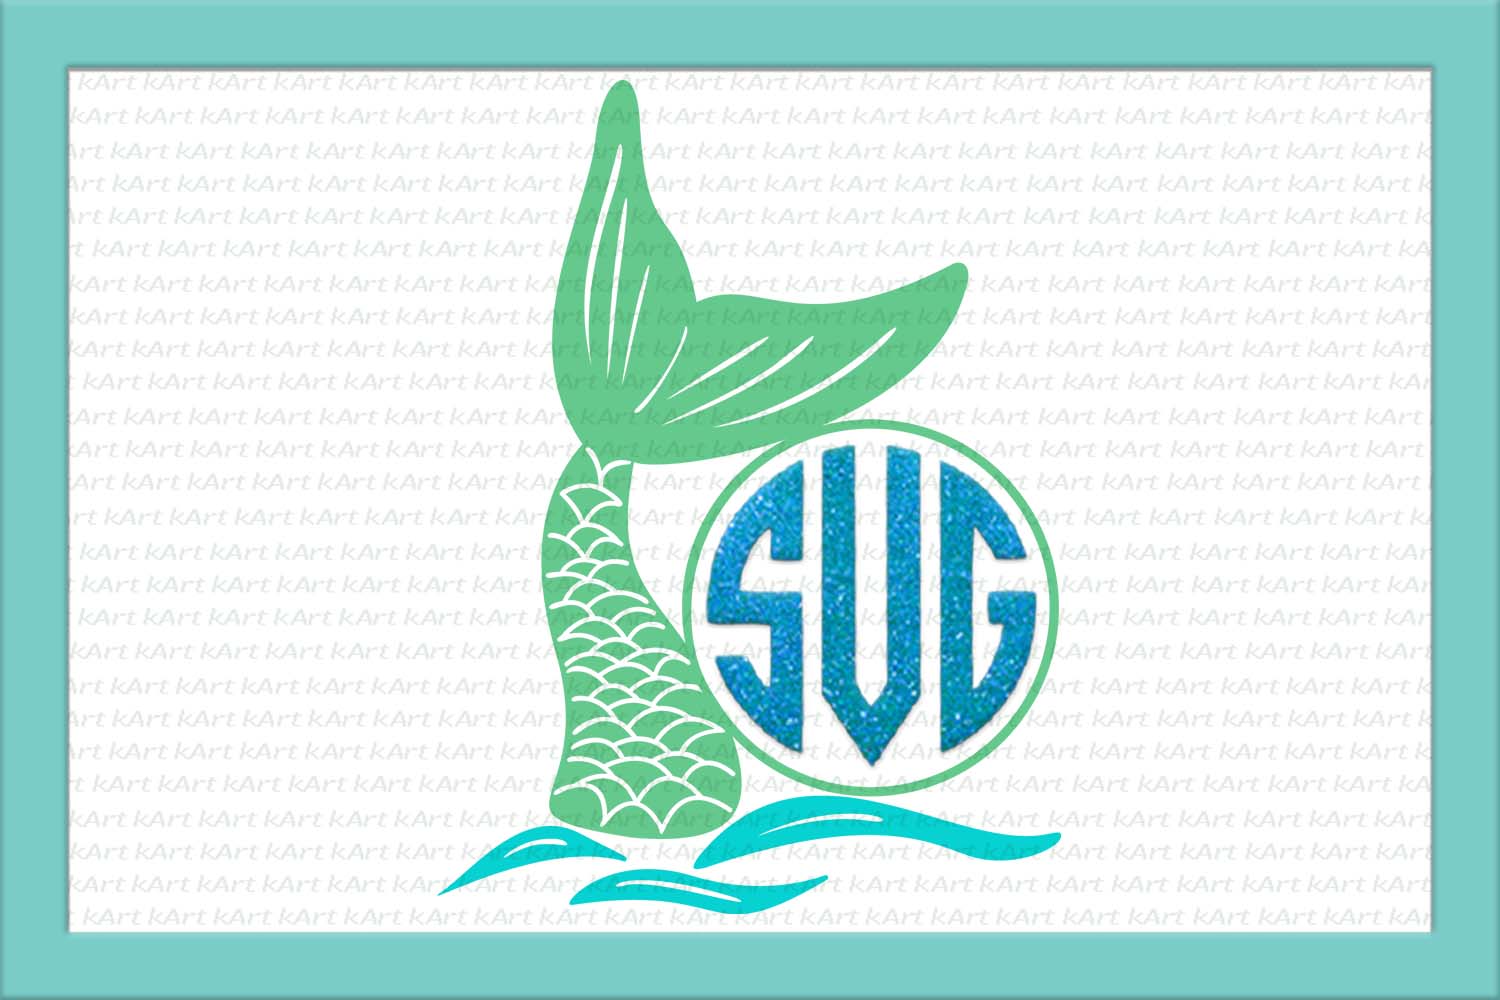 Free Free 201 Unicorn Mermaid Princess Svg Free SVG PNG EPS DXF File